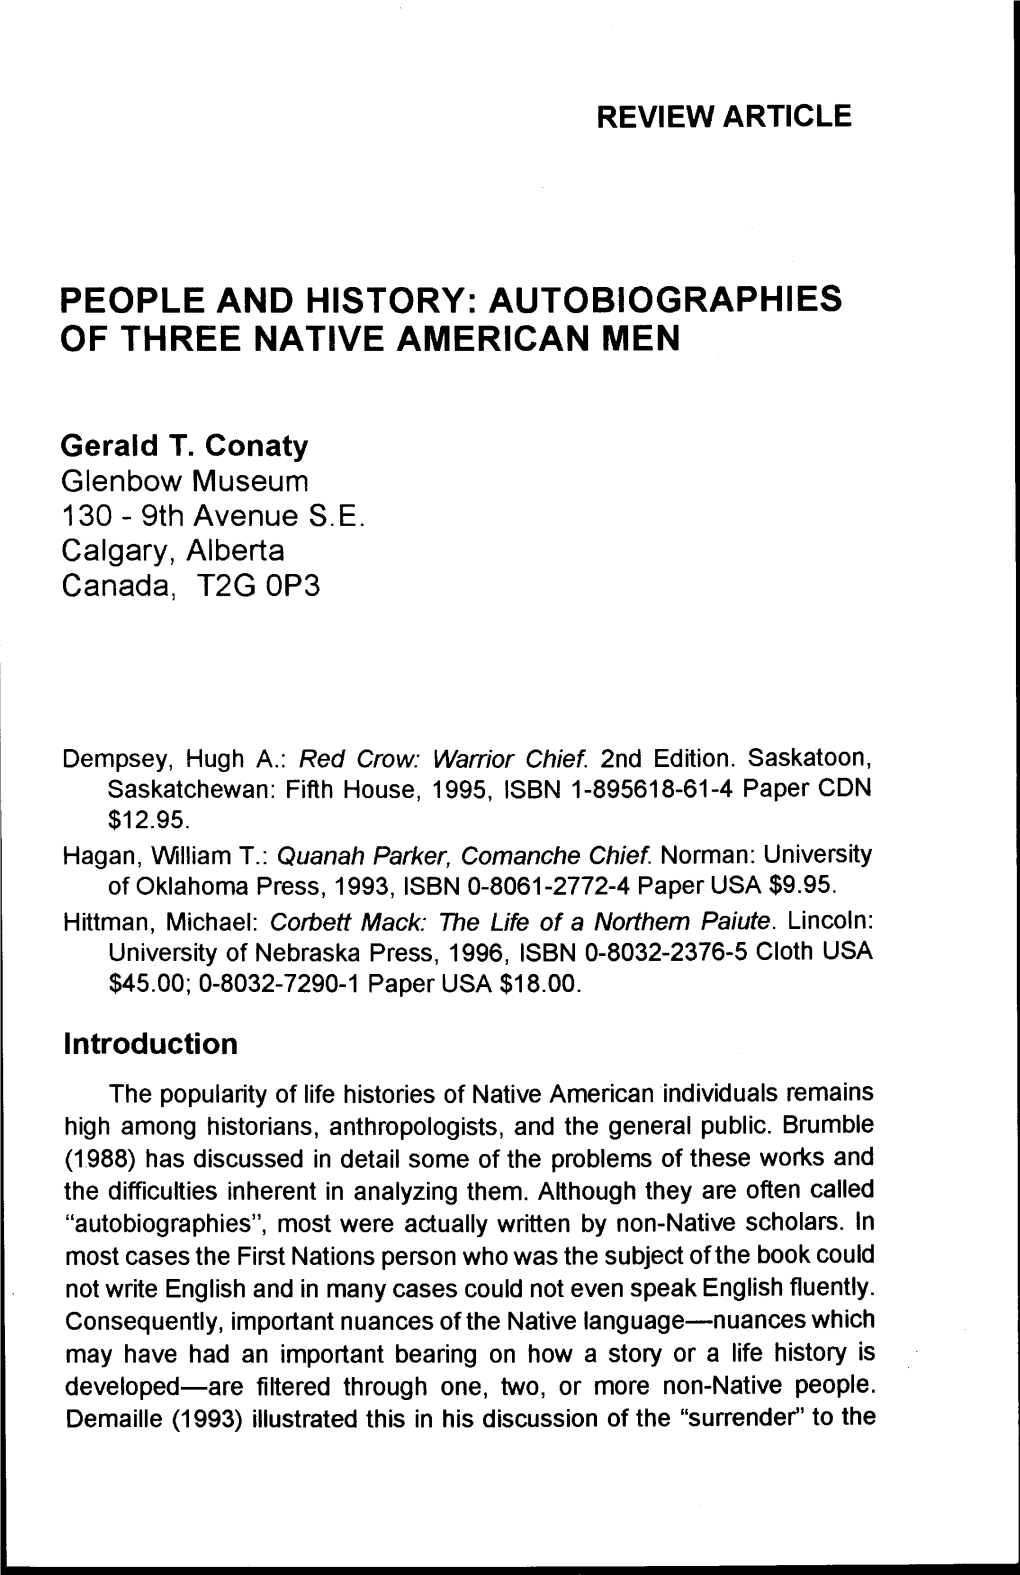 Autobiographies of Three Native American Men